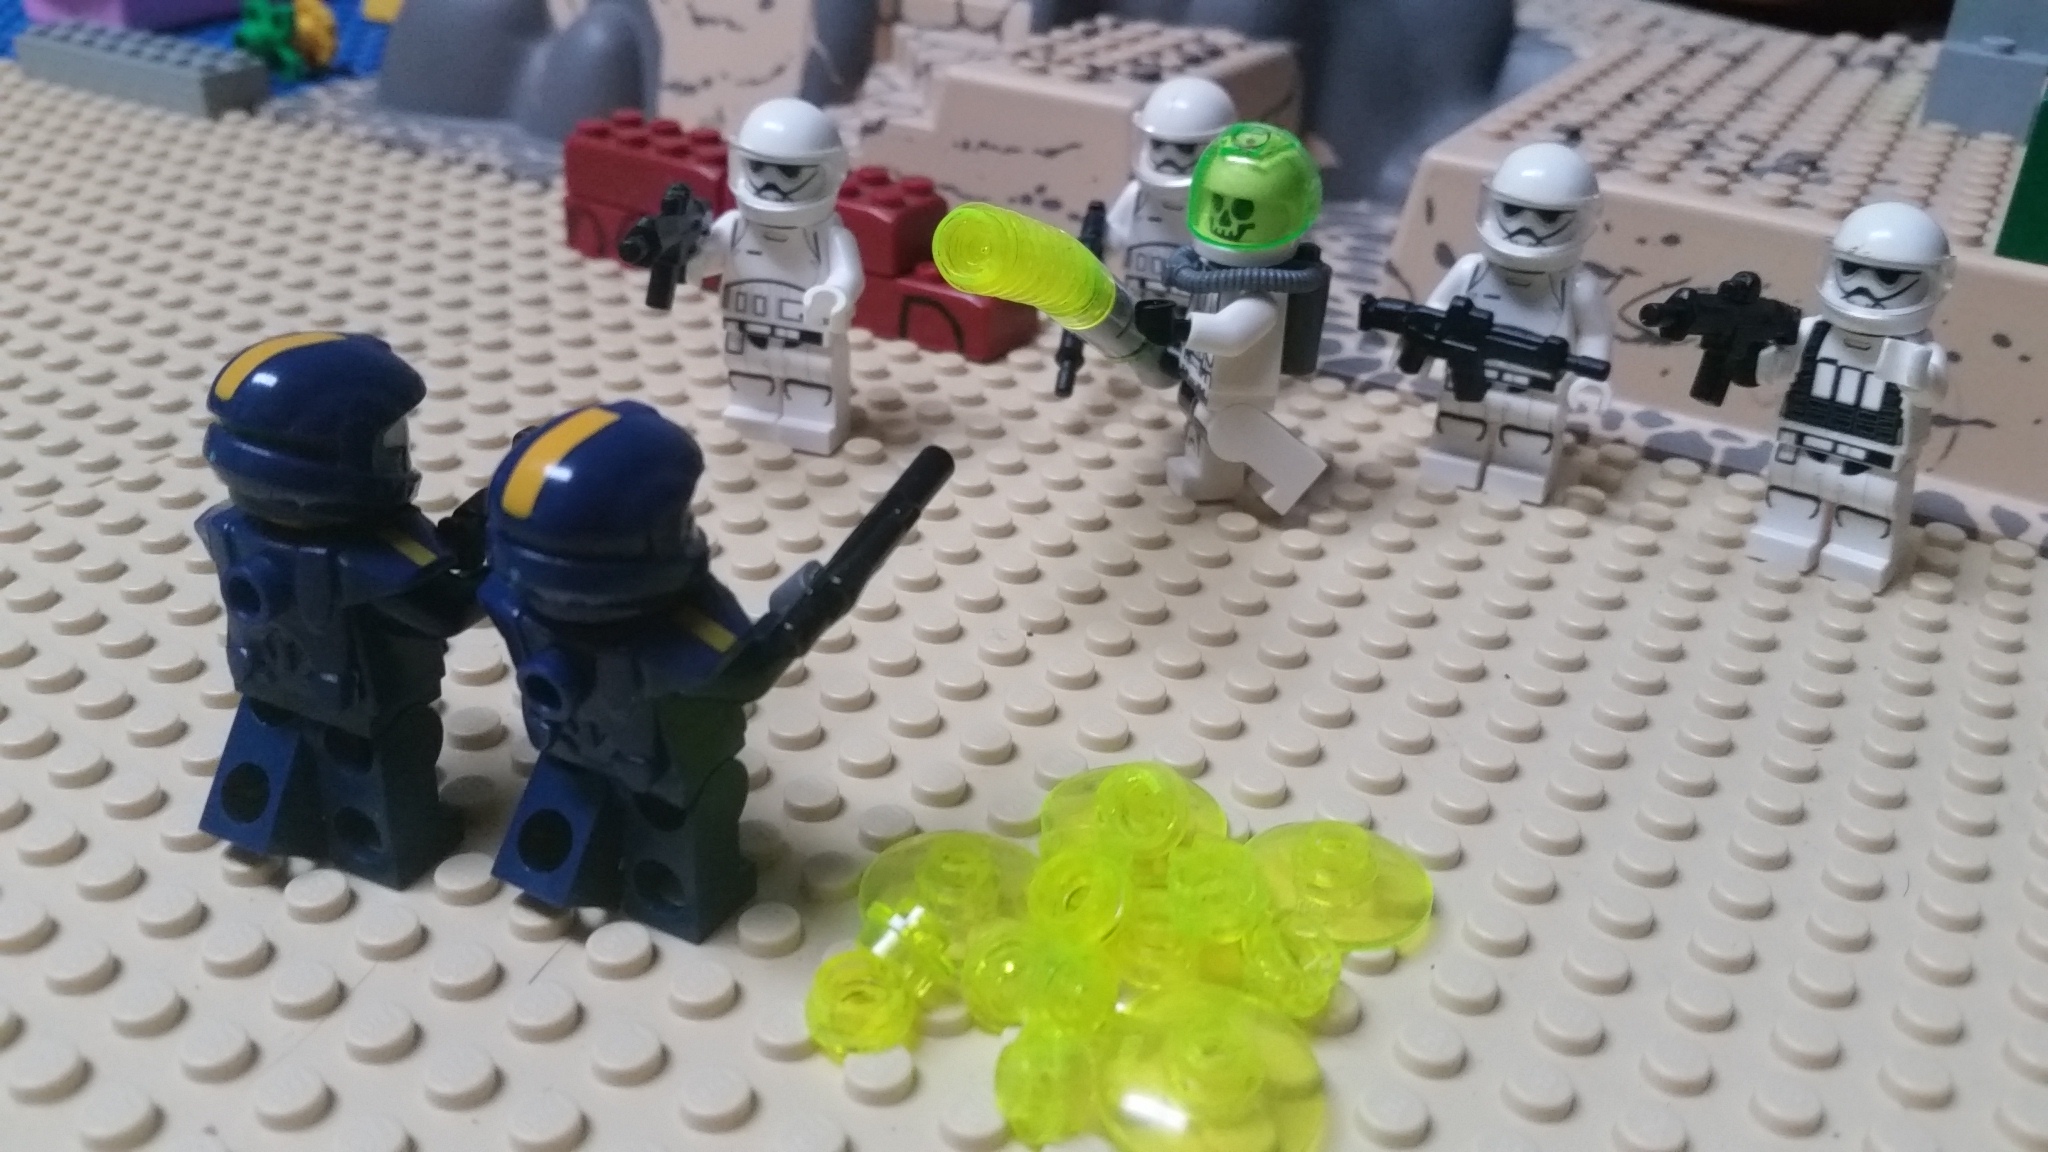 Generation III Advanced Shock Troopers and a Desolator unit engaging rebel aligned mercenaries